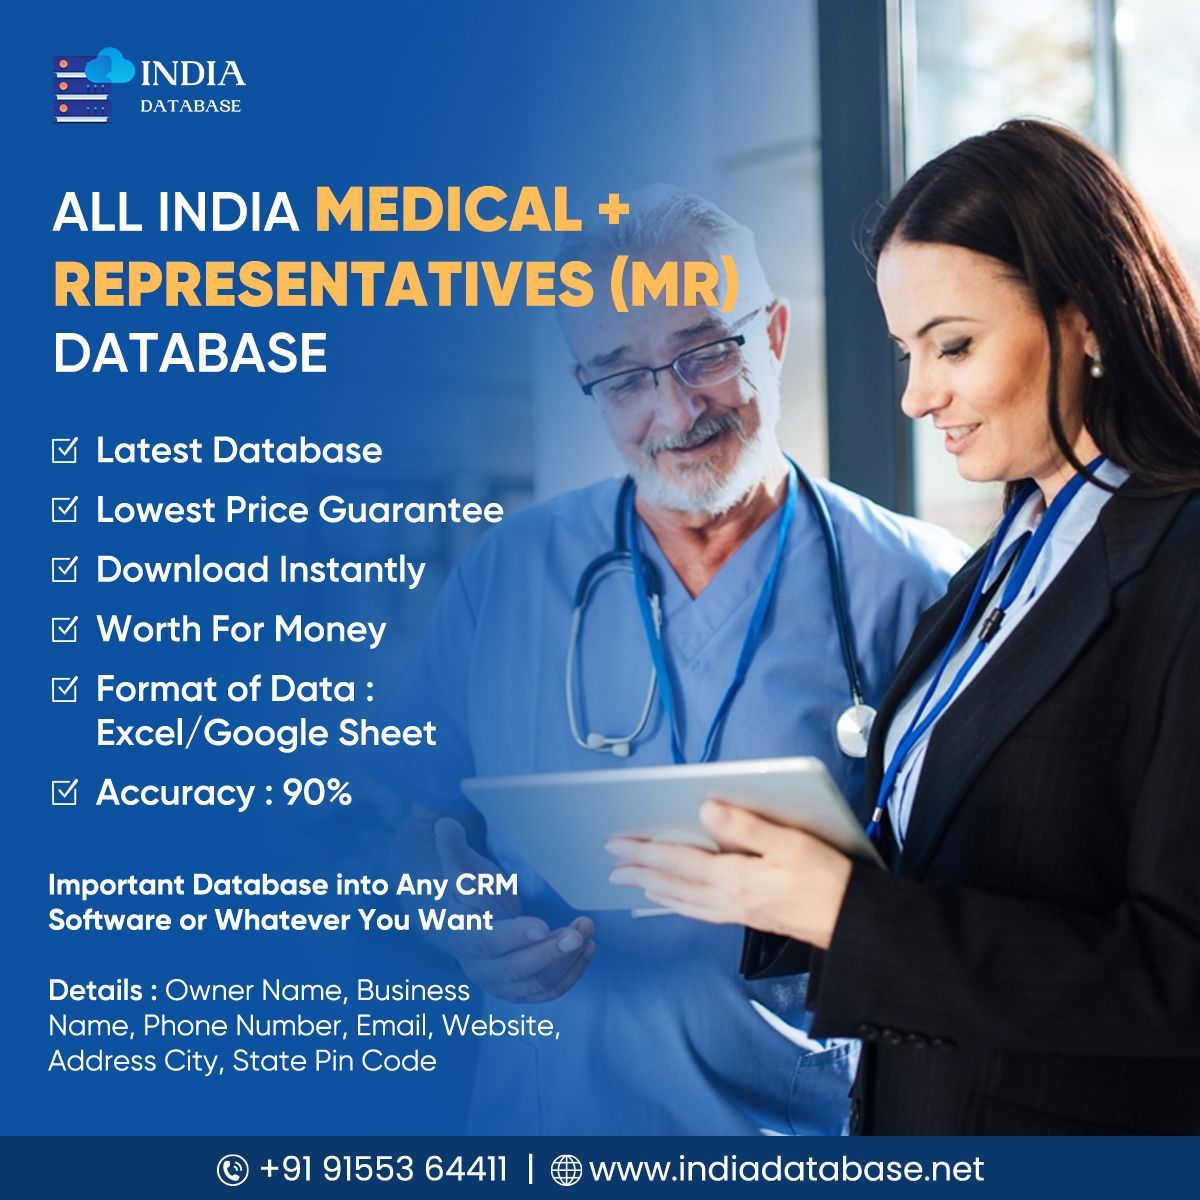 All India Medical + Representatives (MR) Database